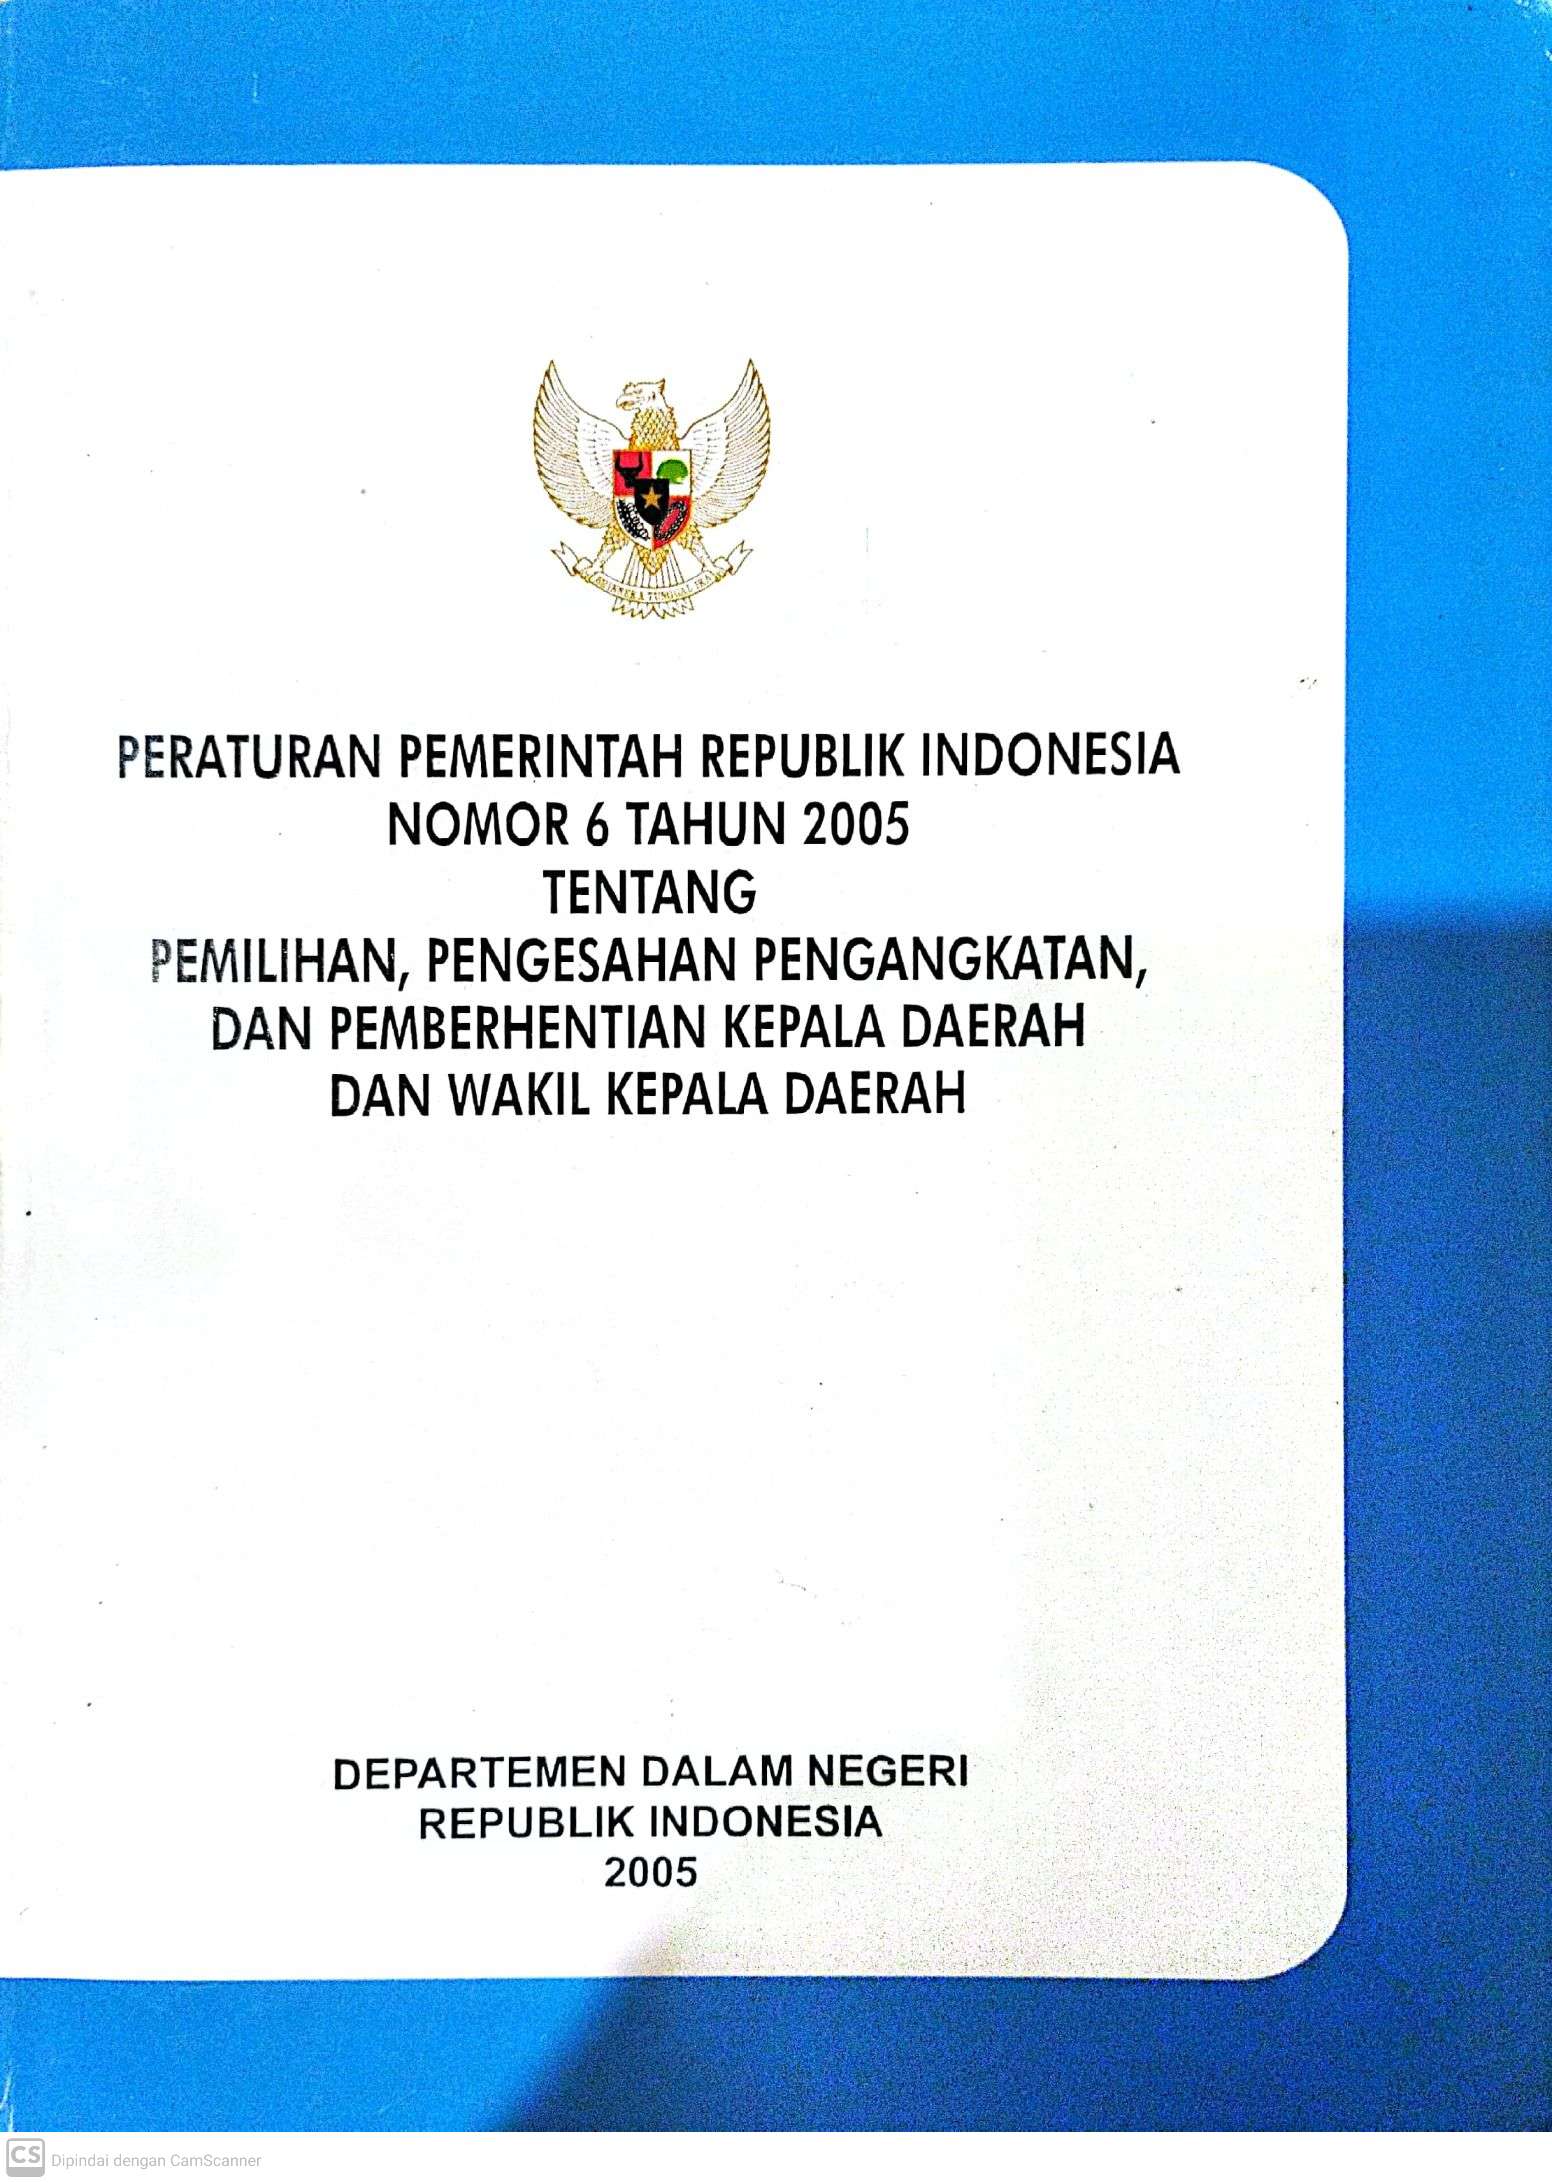 Peraturan Pemerintah Republik Indonesia Nomor 6 Tahun 2005 Tentang Pemilihan, Pengesahan Pengangkatan dan Pemberhentian Kepala Daerah dan Wakil Kepala Daerah